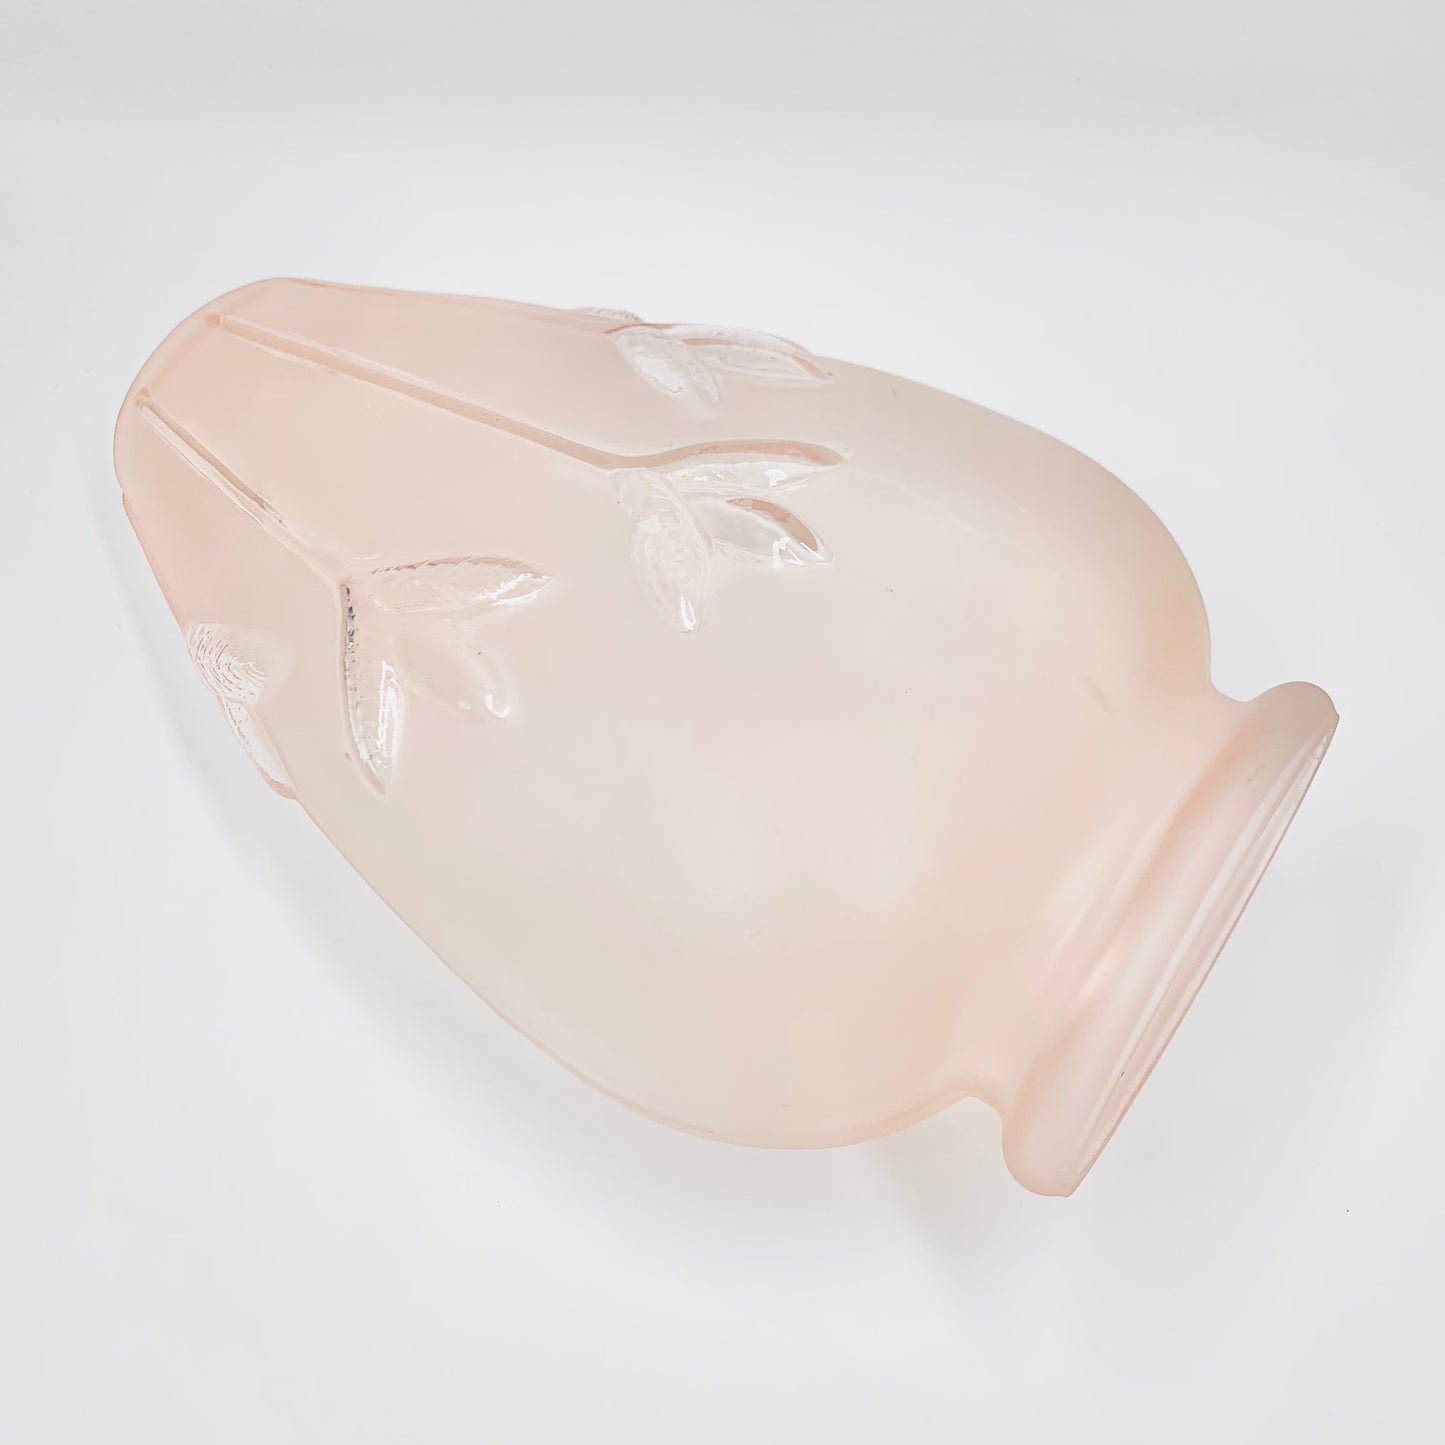 Stunning 1980s Art Deco revival hand made pink satin art glass vase